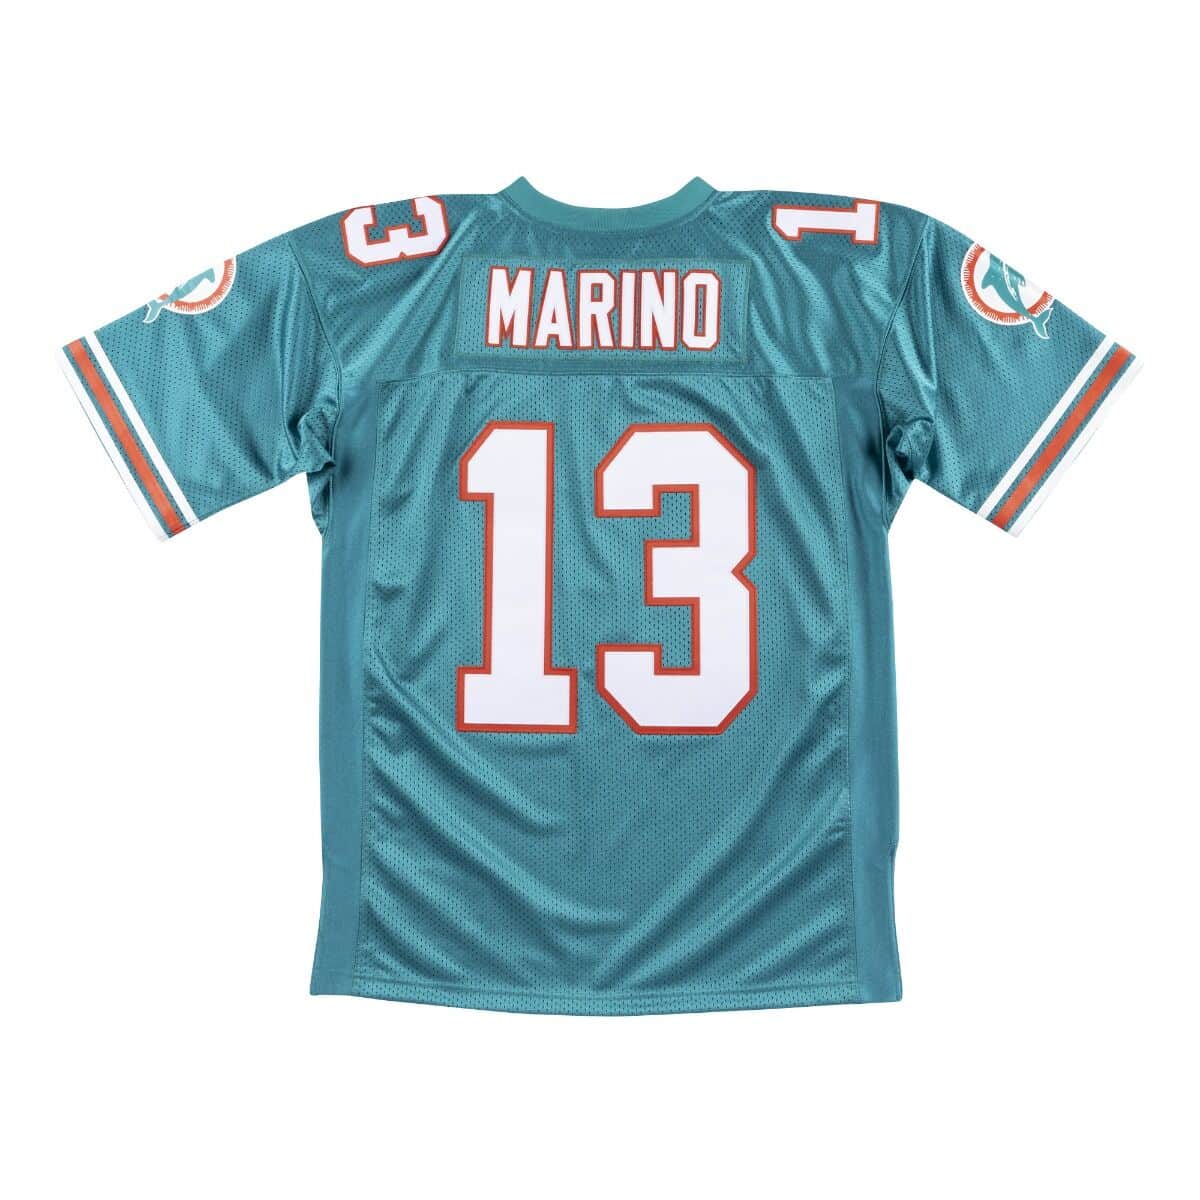 Dan Marino NFL Jerseys, Apparel and Collectibles